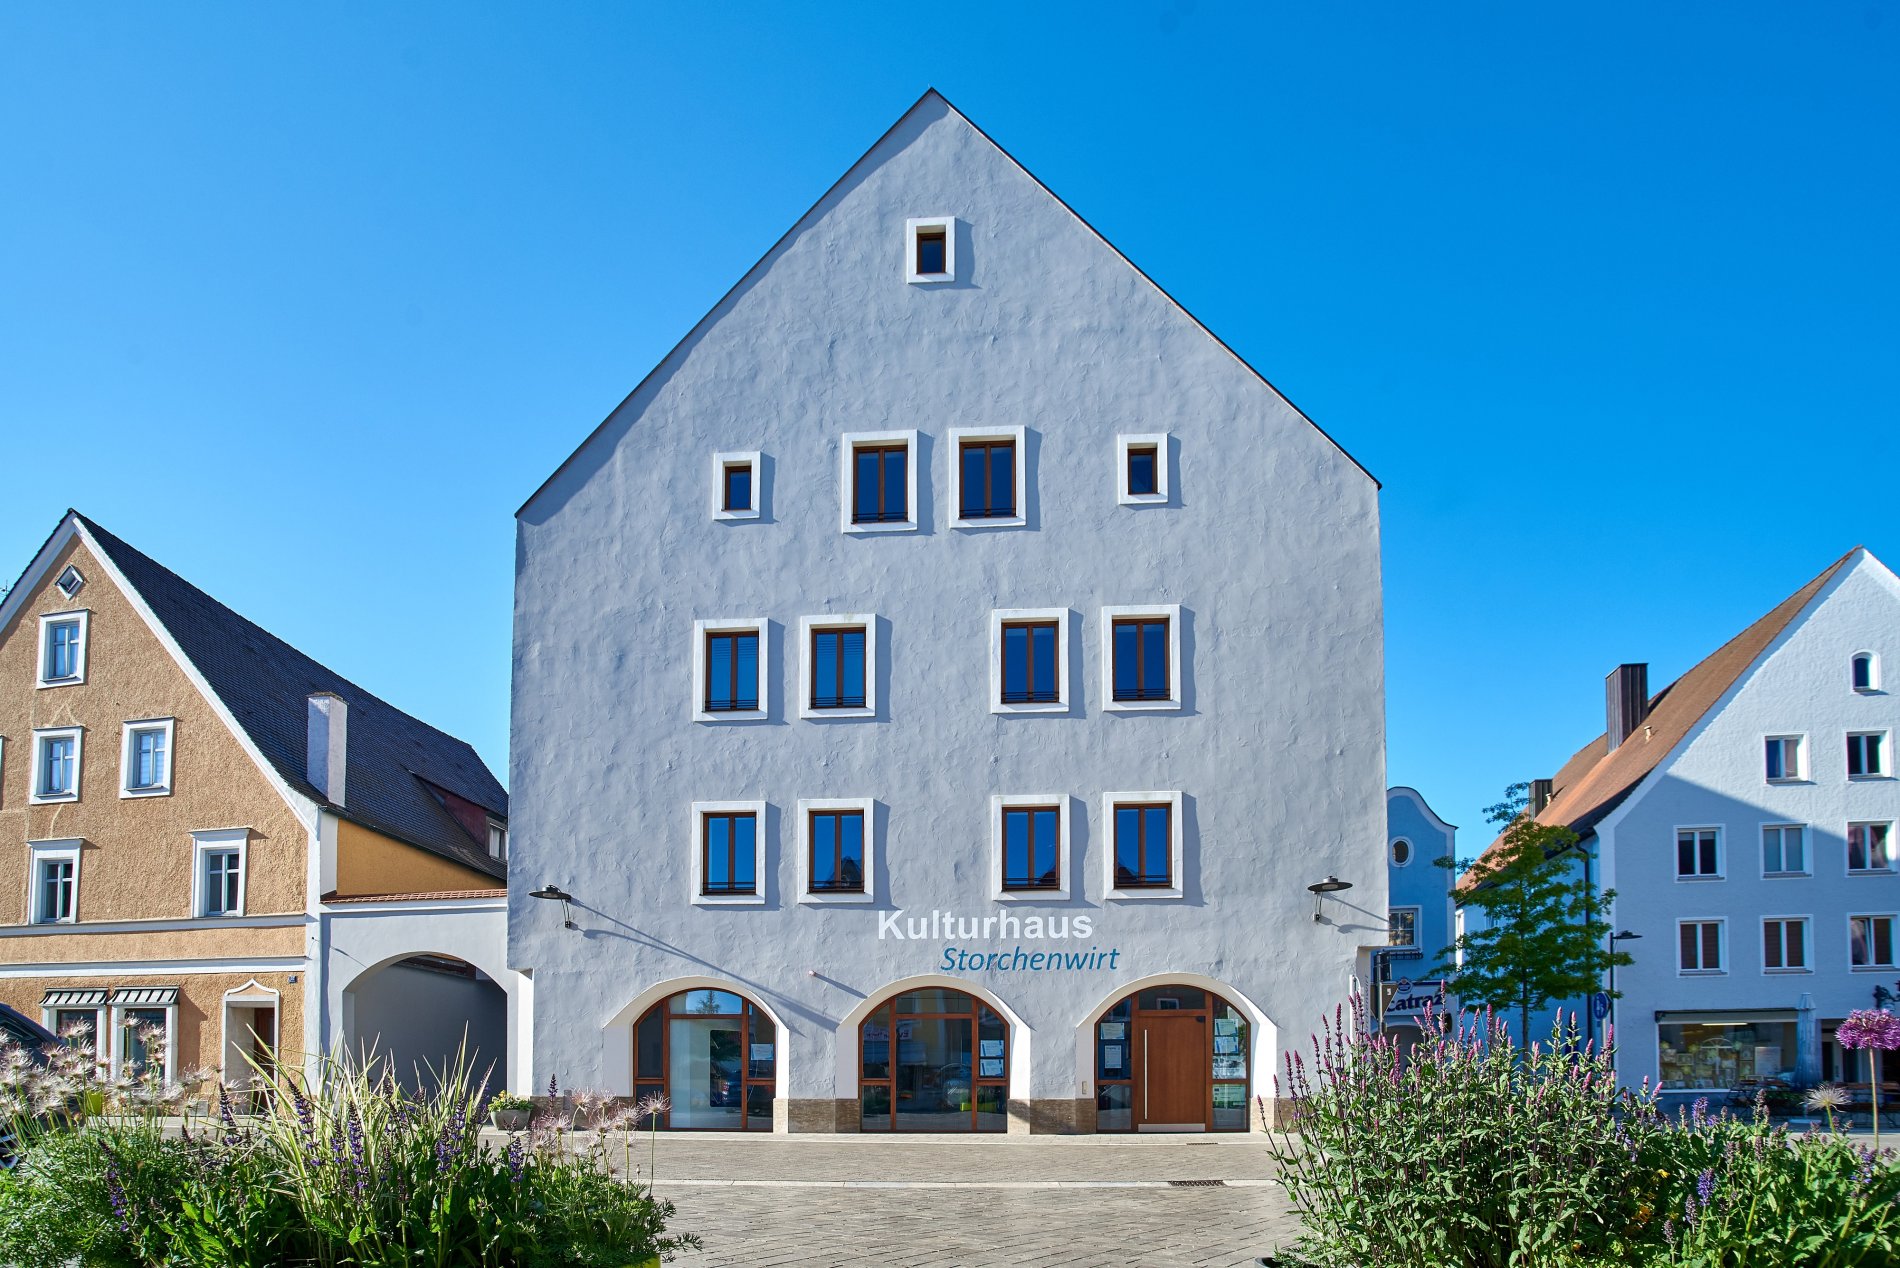 Das Kulturhaus Storchenwirt am Stadtplatz in Neustadt a.d.Donau beherbergt u.a. ein interaktives Museum.